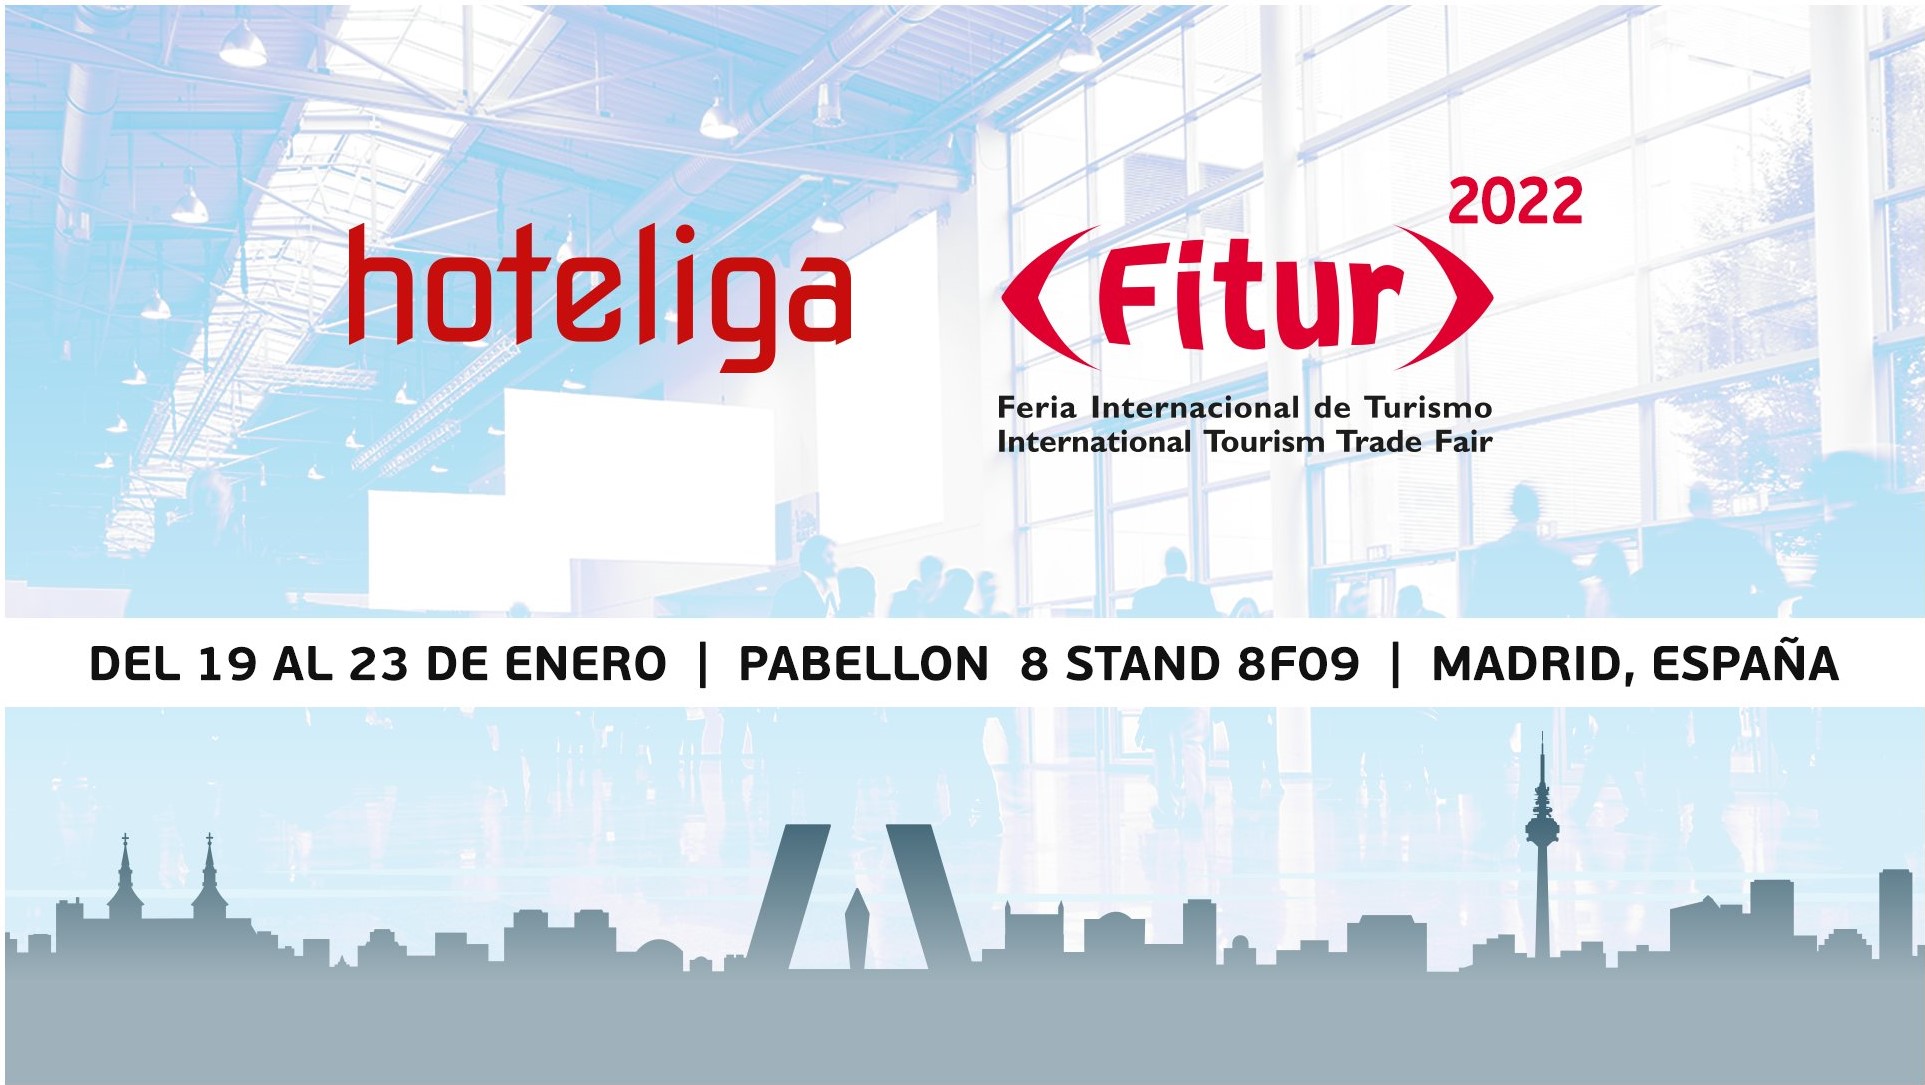 
			Fitur 2022: Στο πρώτο meeting point του παγκόσμιου τουρισμού η hoteliga θα είναι εκεί!
		